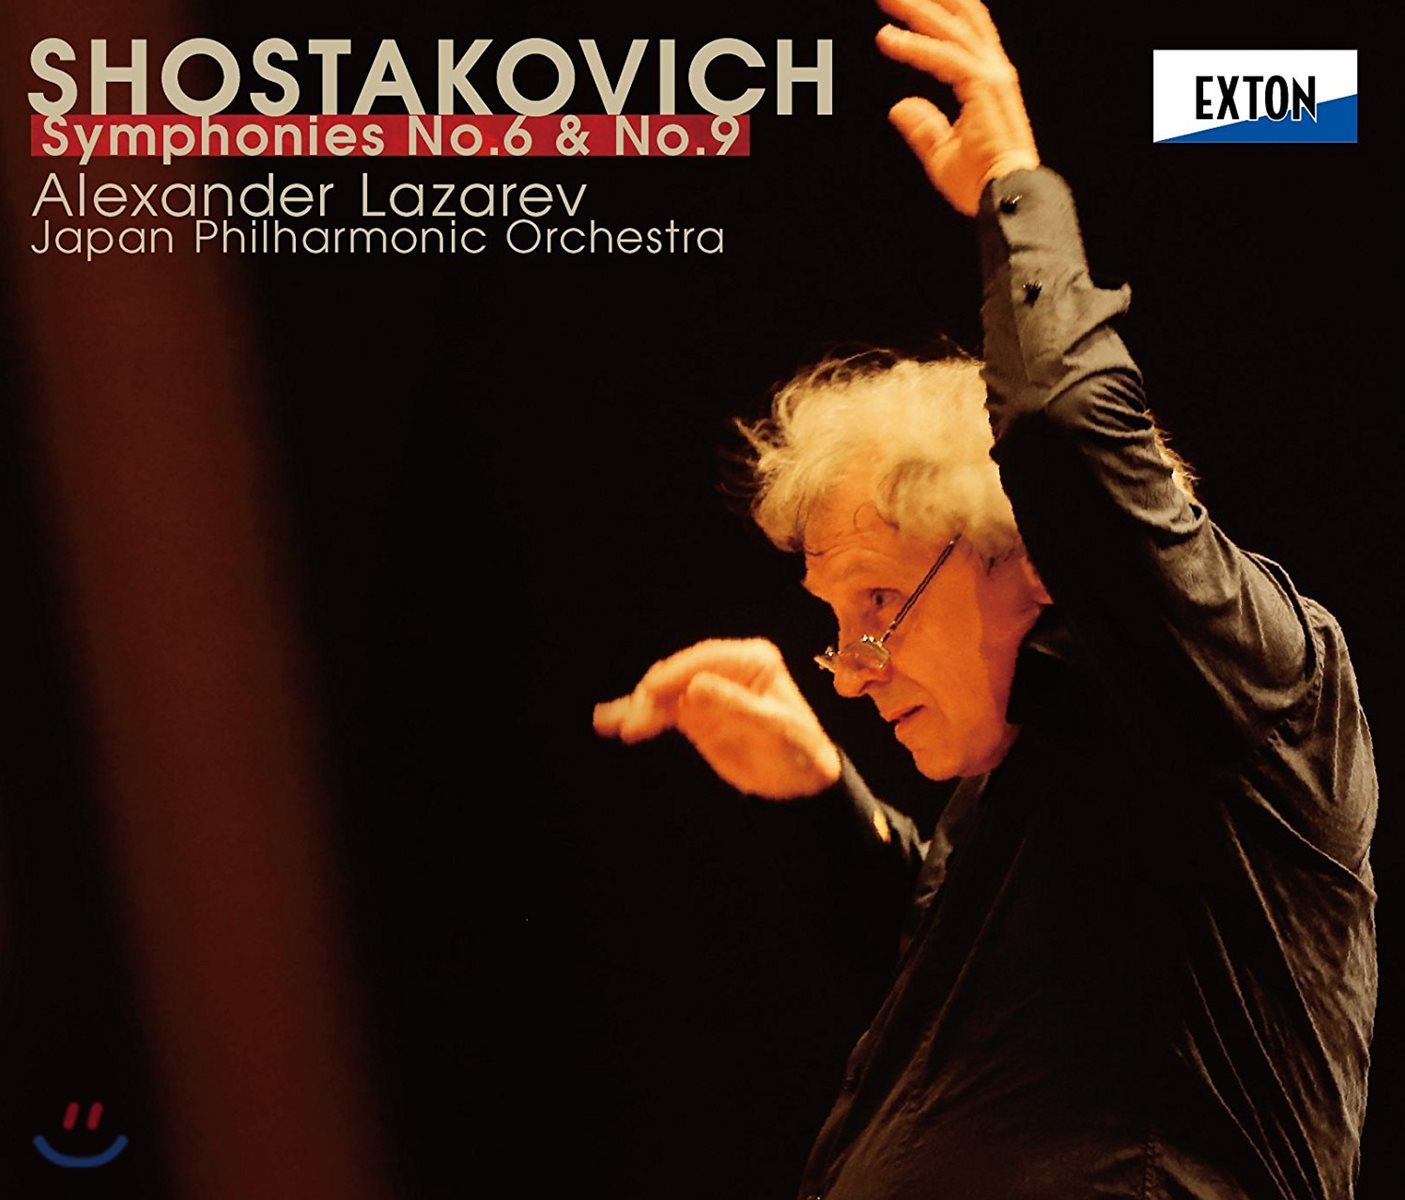 Alexander Lazarev 쇼스타코비치: 교향곡 6번, 9번 - 재팬 필하모닉 오케스트라, 알렉산더 라자레프 (Shostakovich: Symphony No.6 &amp; 9)